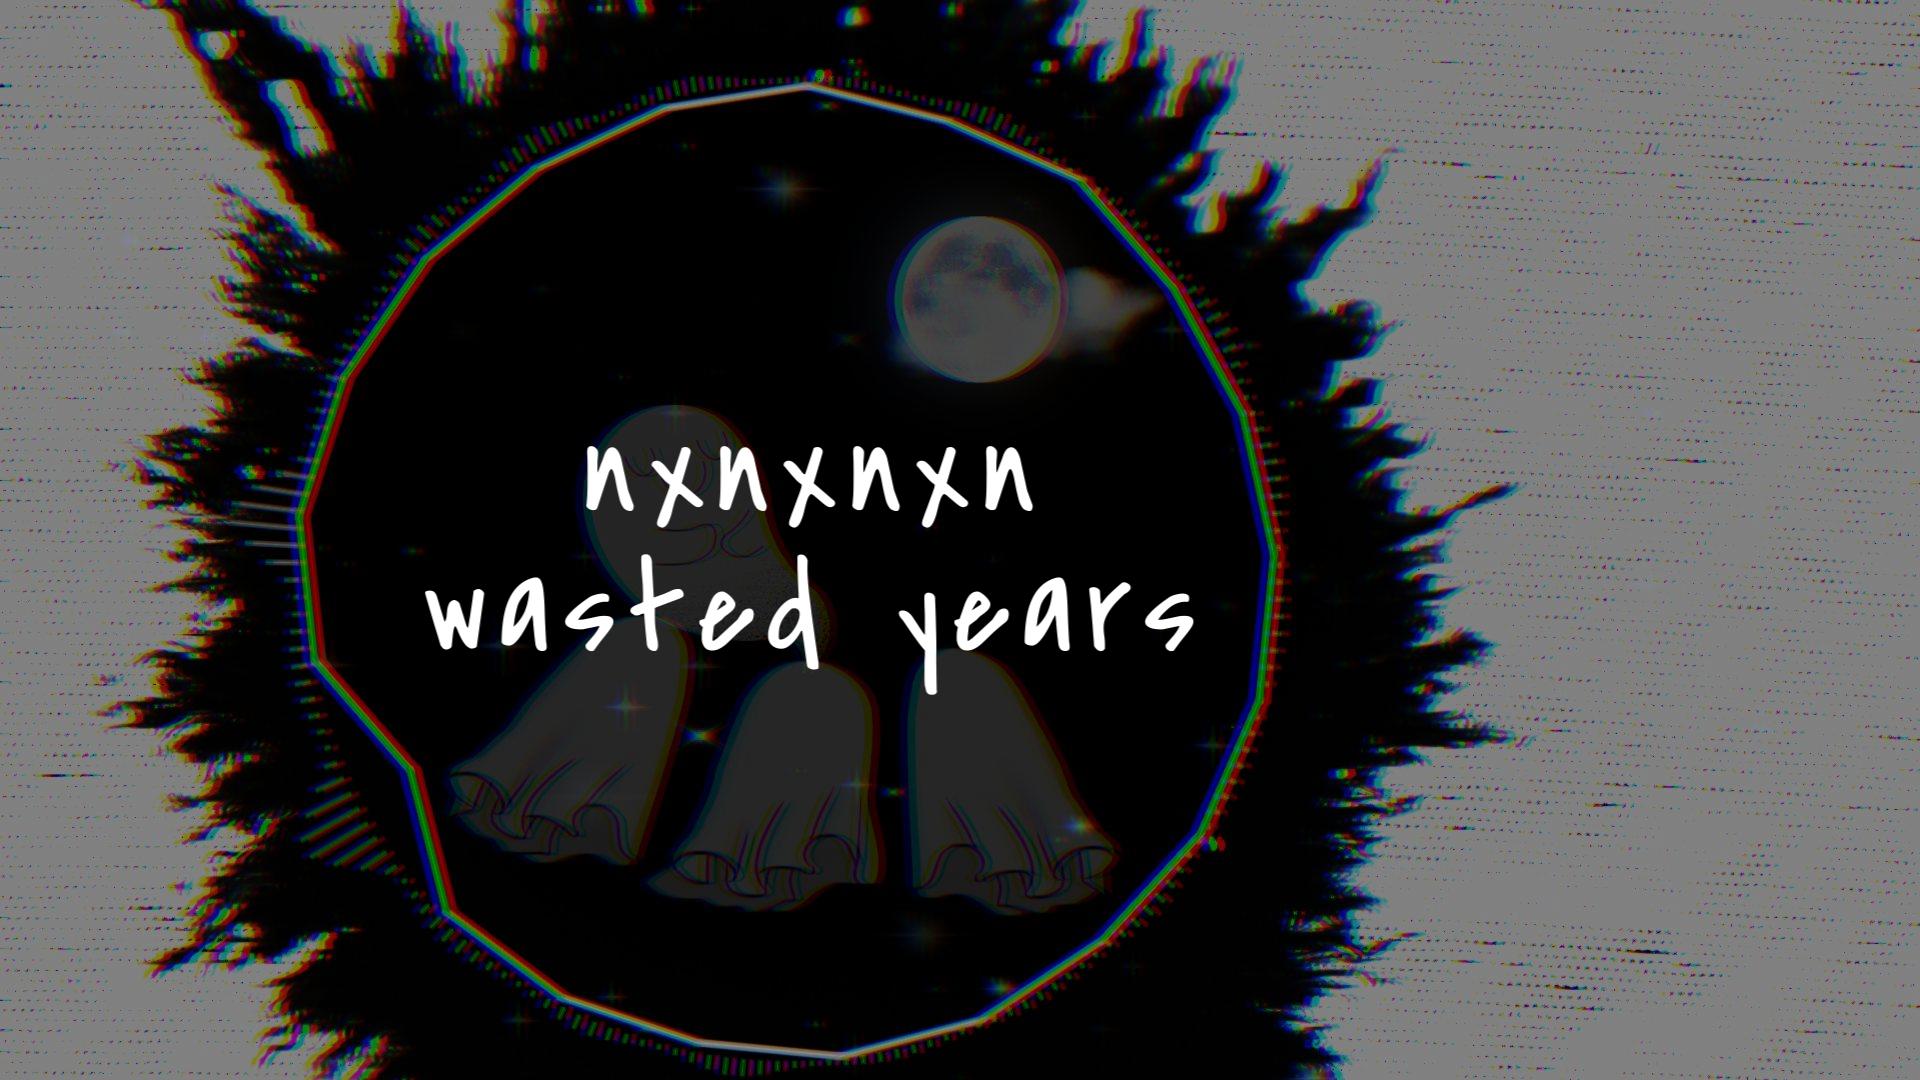 NxNxNxN - Wasted Years (Lyric Video)